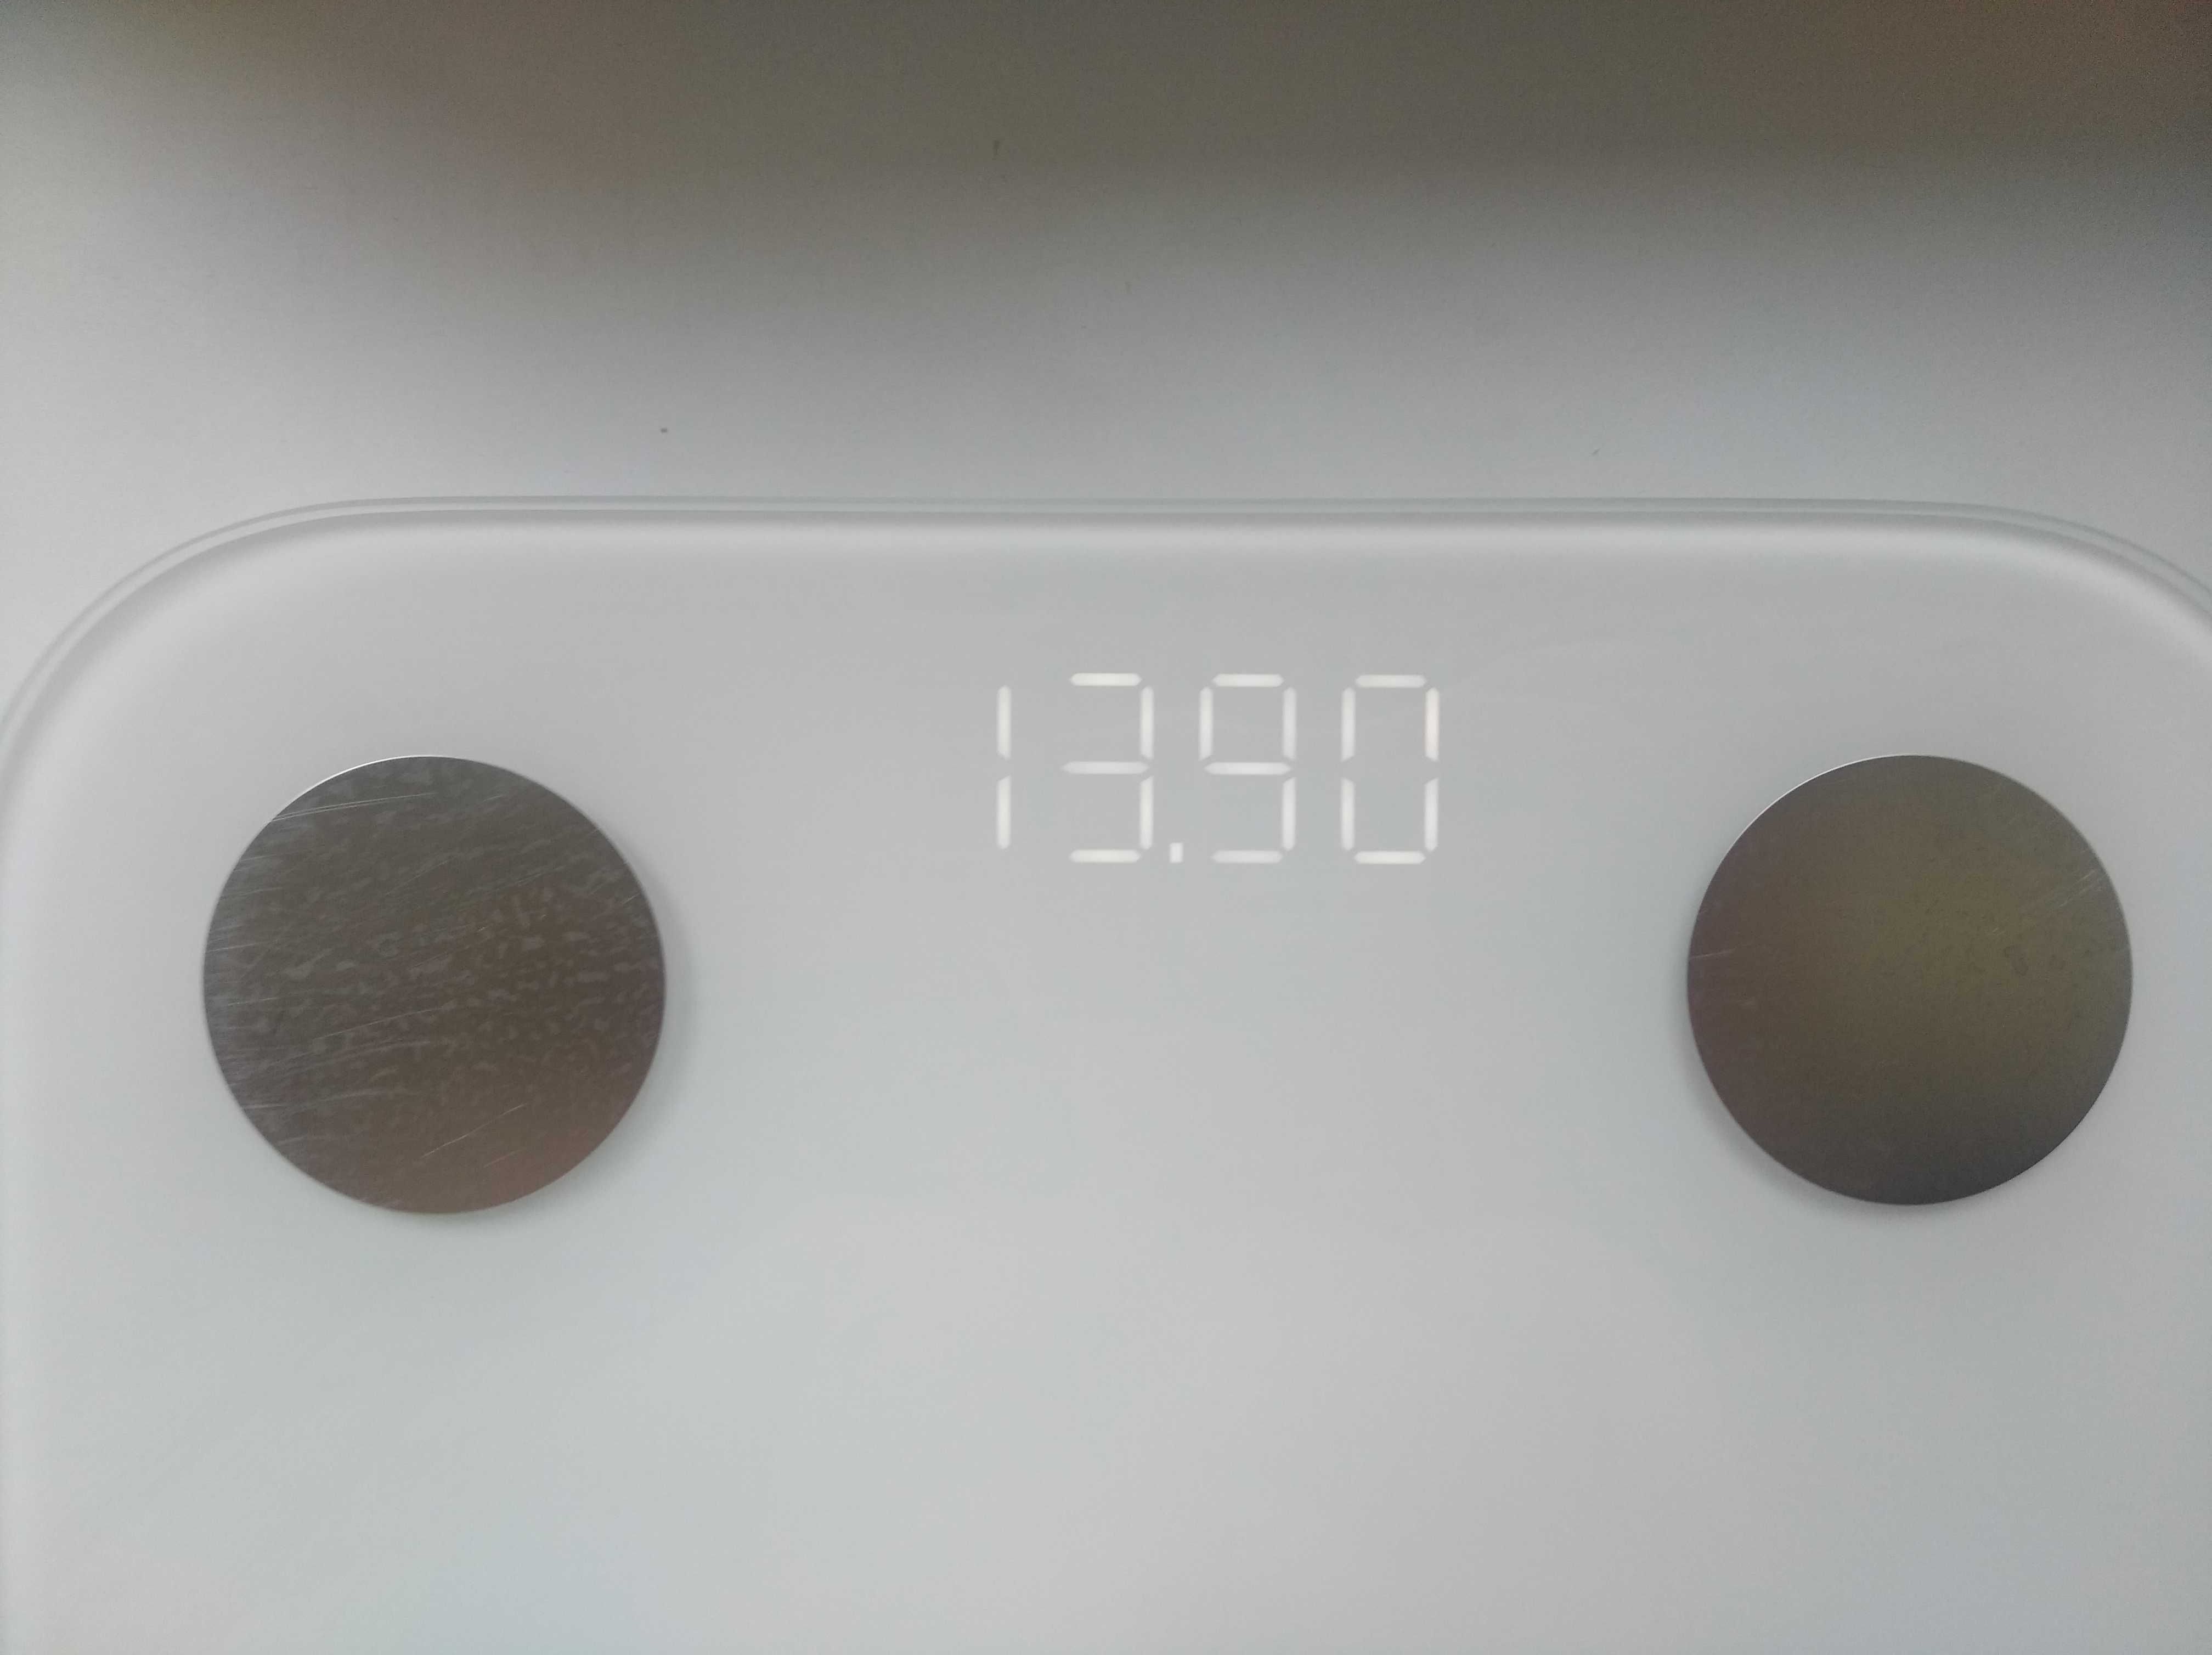 Продам Xiaomi Mi Body Composition Scale 2, Умные весы